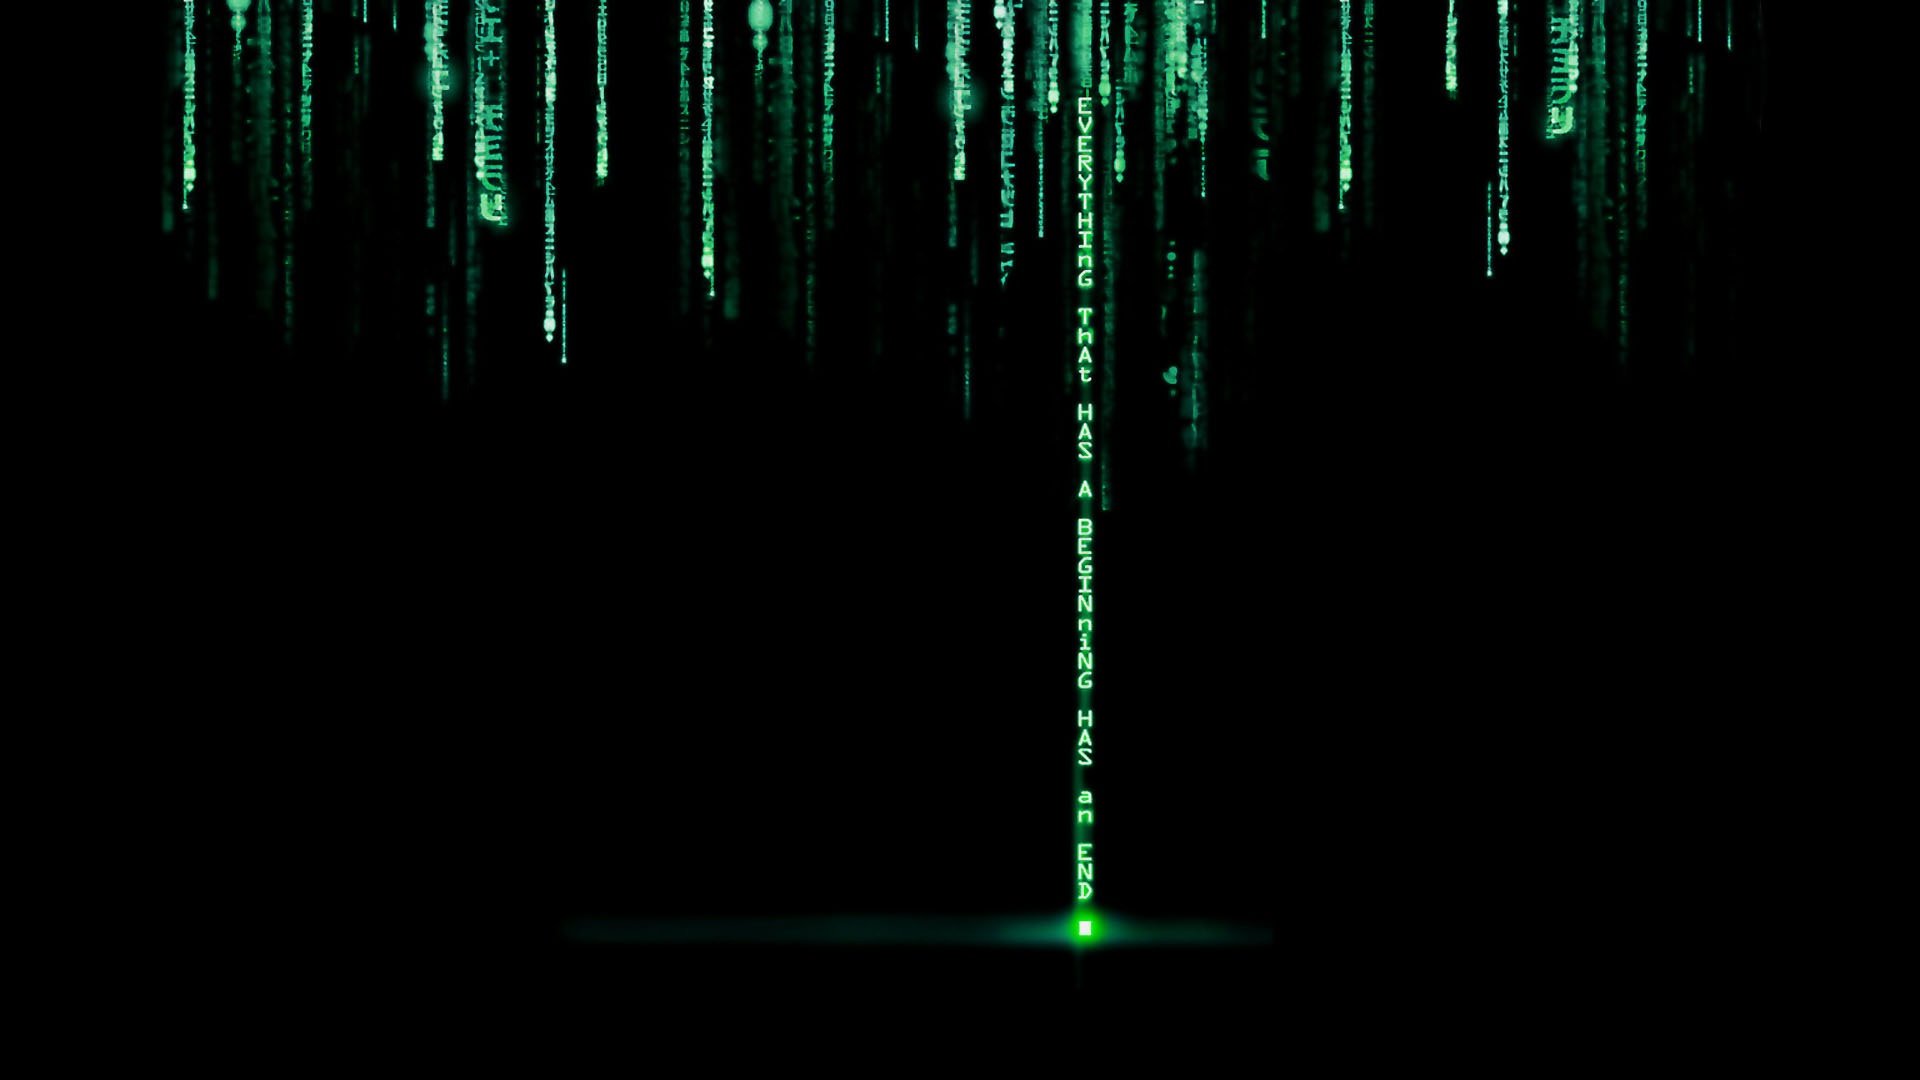 Matrix Code Wallpaper Background